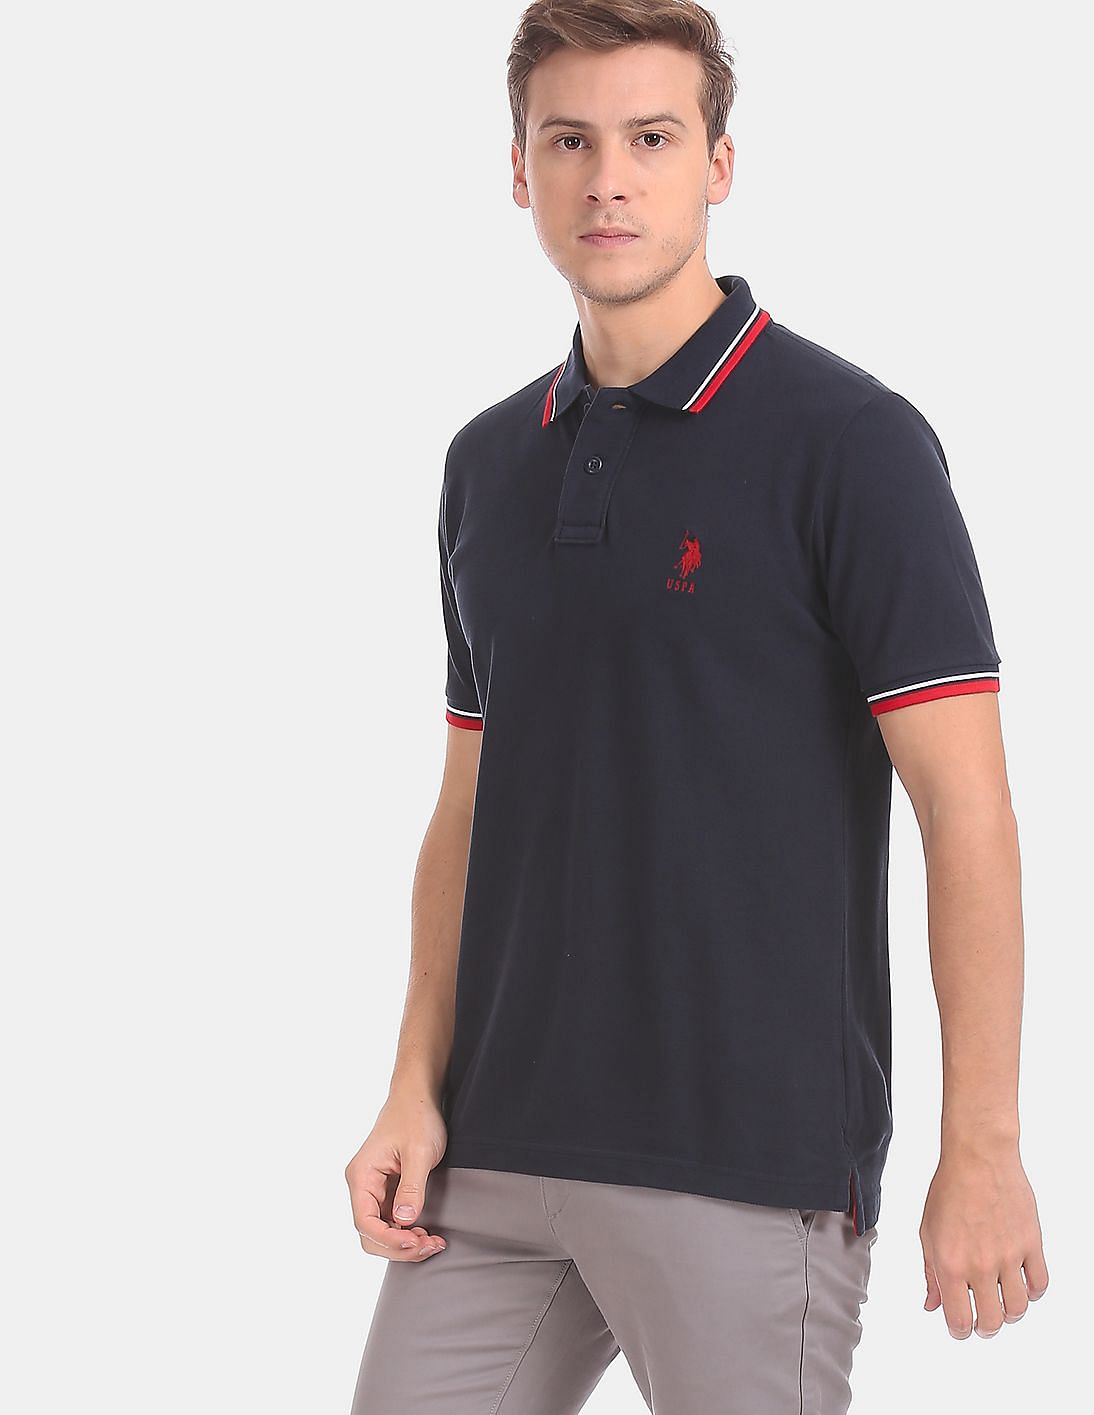 Buy U.S. Polo Assn. Solid Pique Polo Shirt - NNNOW.com